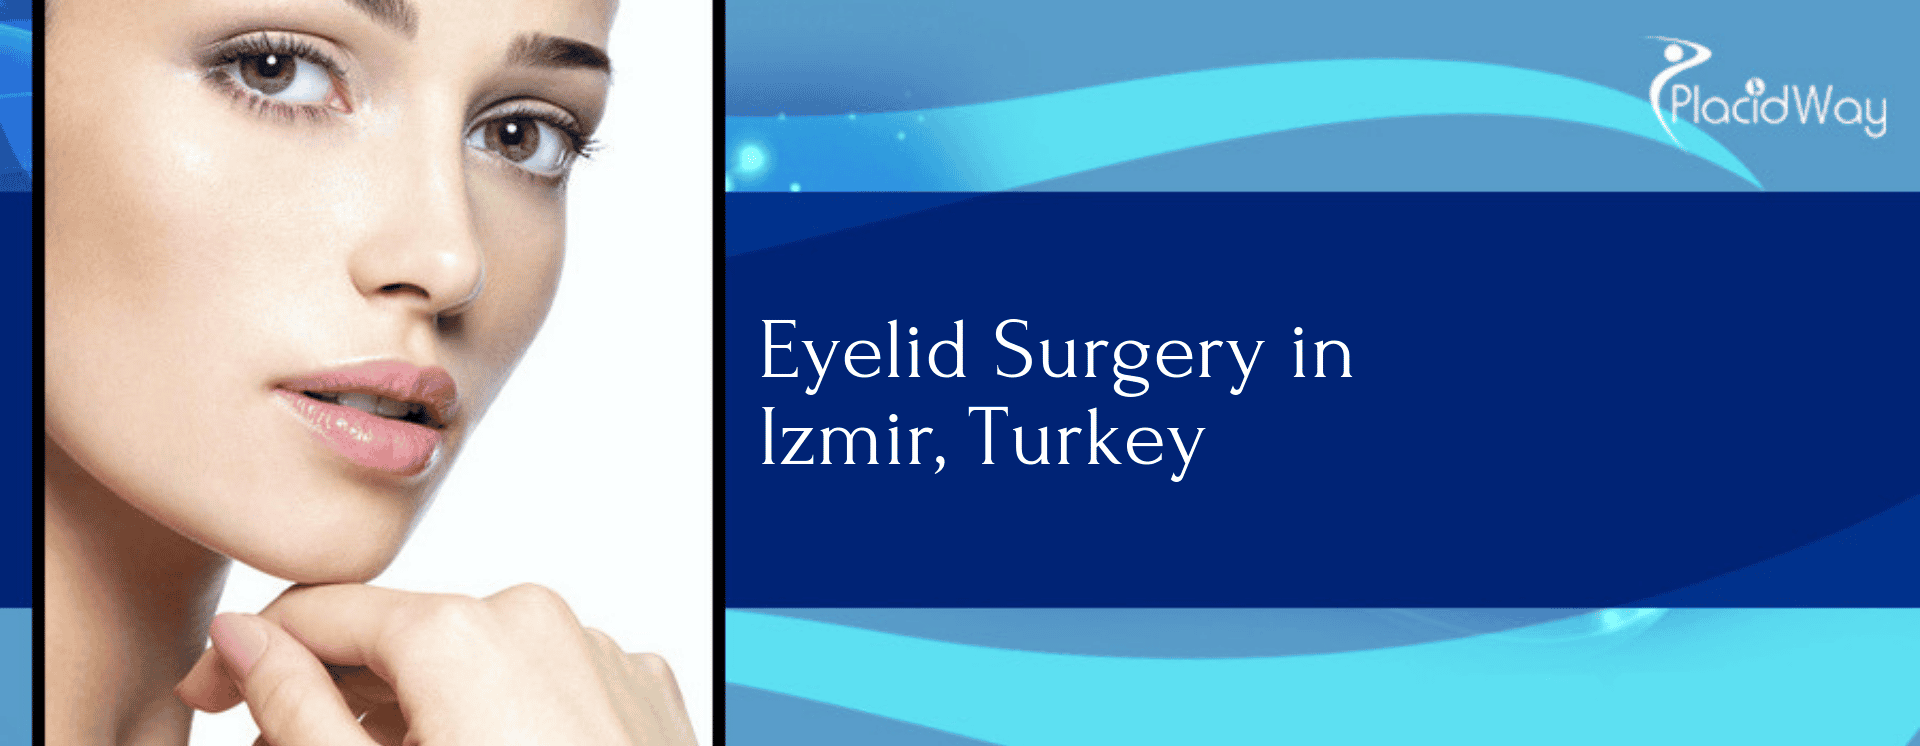 Eyelid Surgery in Izmir, Turkey